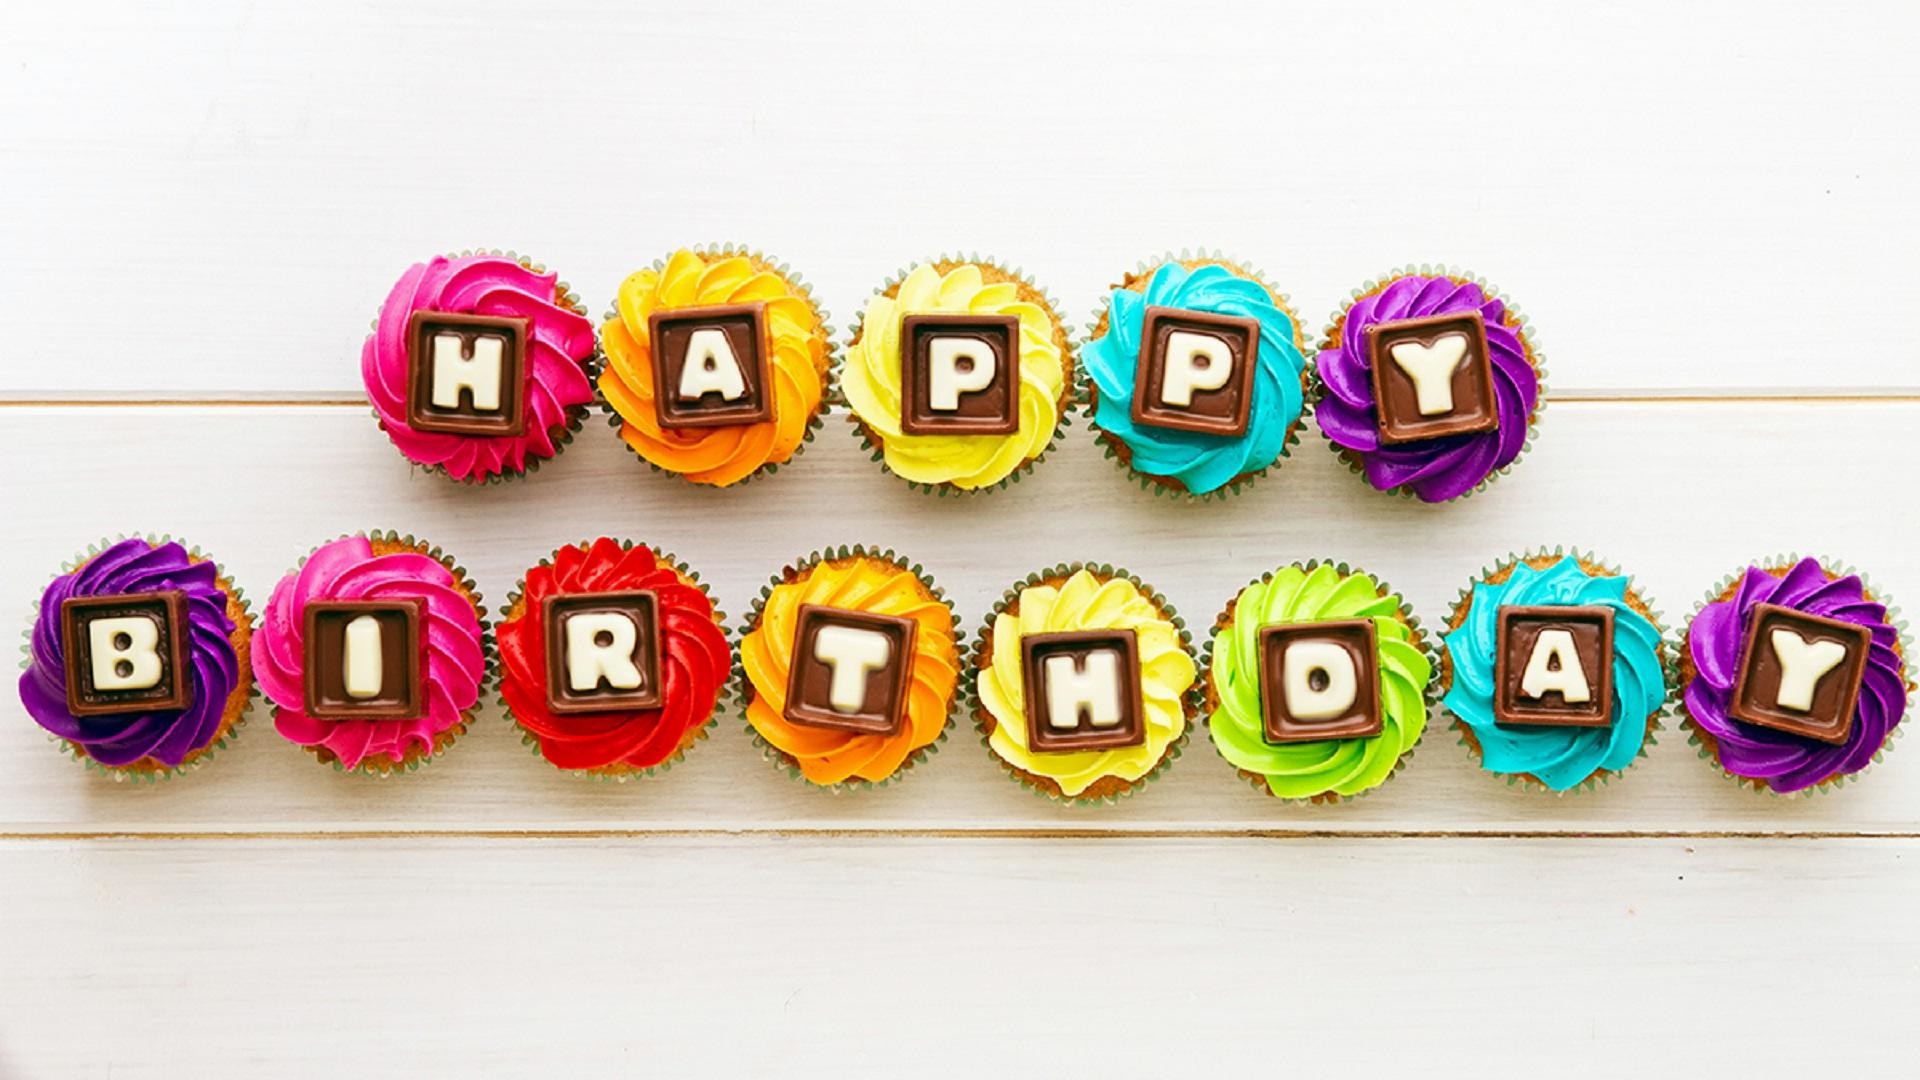 1920x1080 Wish-you-many-returns-day-happy-birthday-backgrounds-